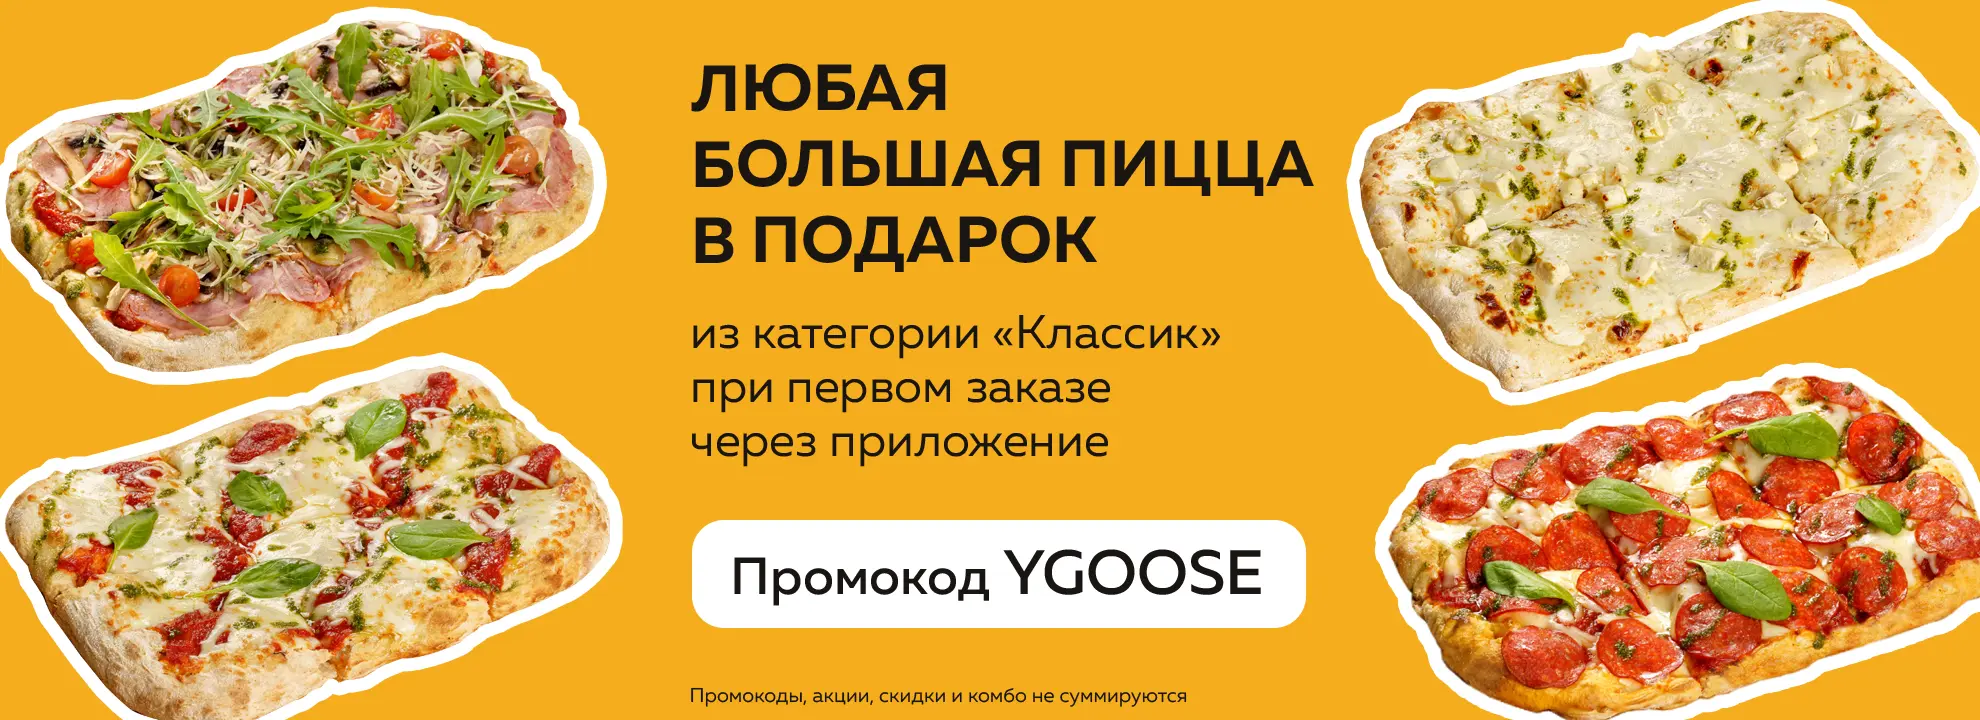 slide-https://pizza-goose.ru#/promo/YGOOSE